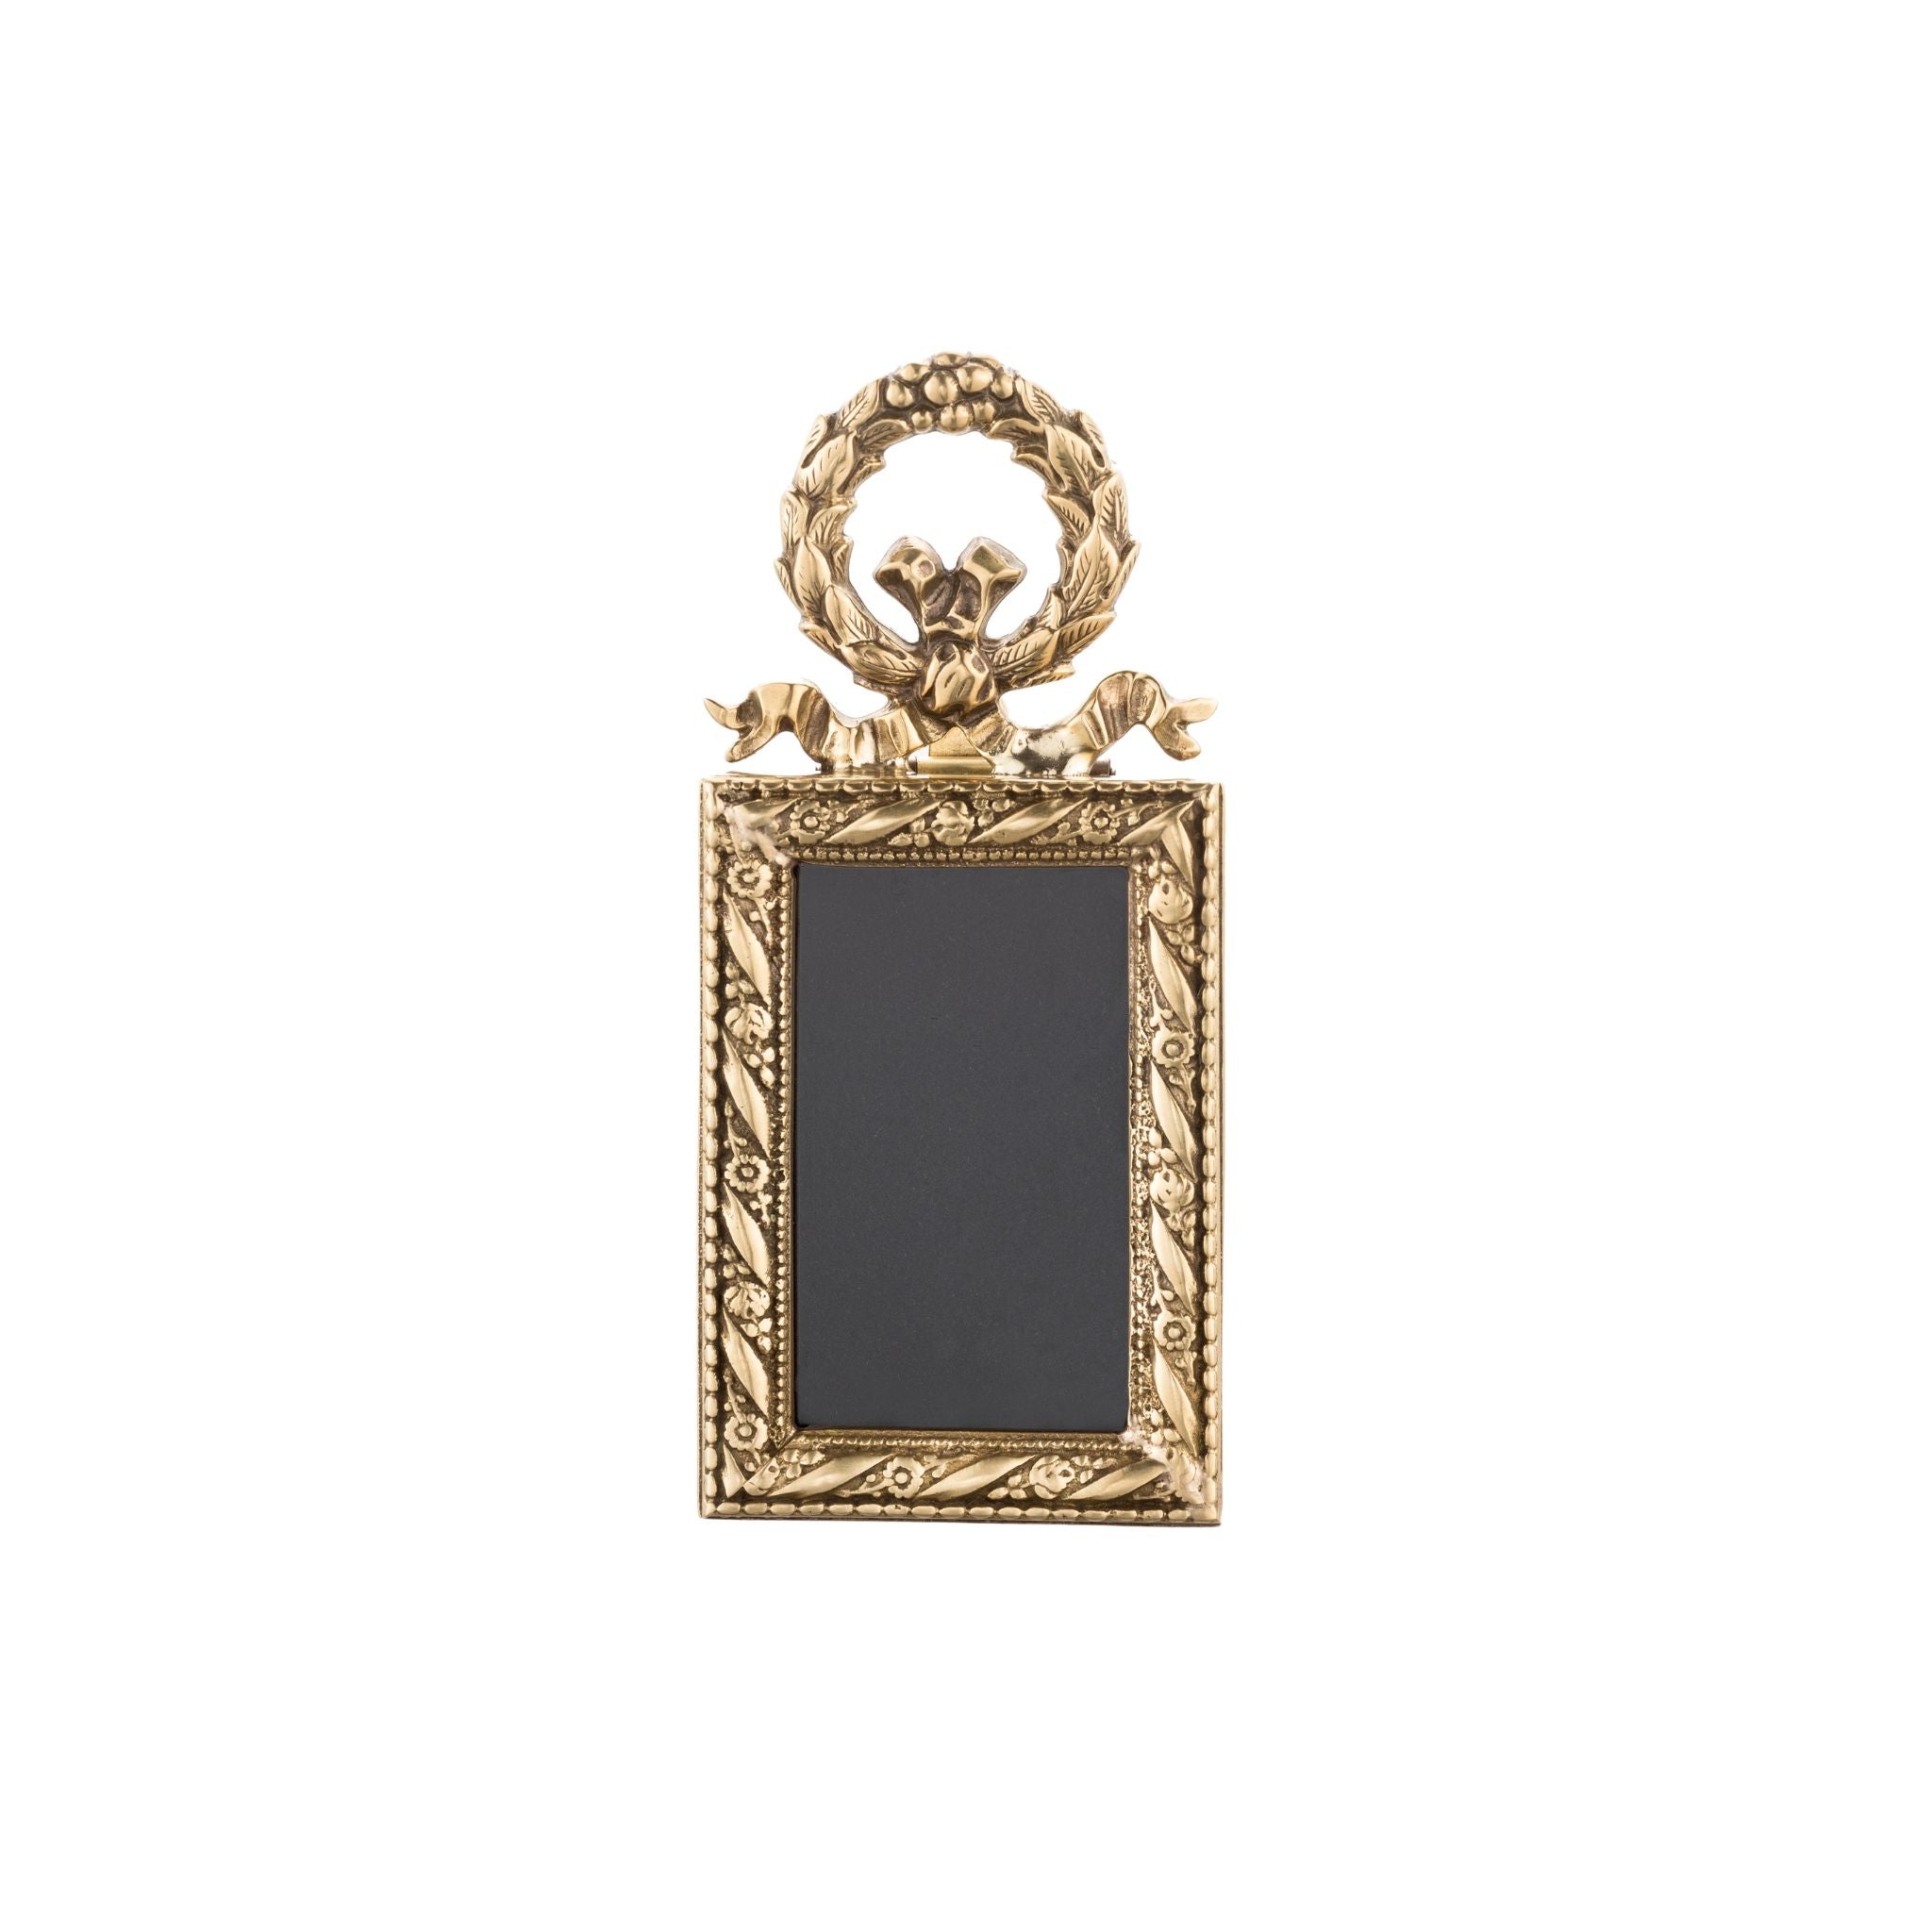 Sissi brass frame with garland - ilbronzetto